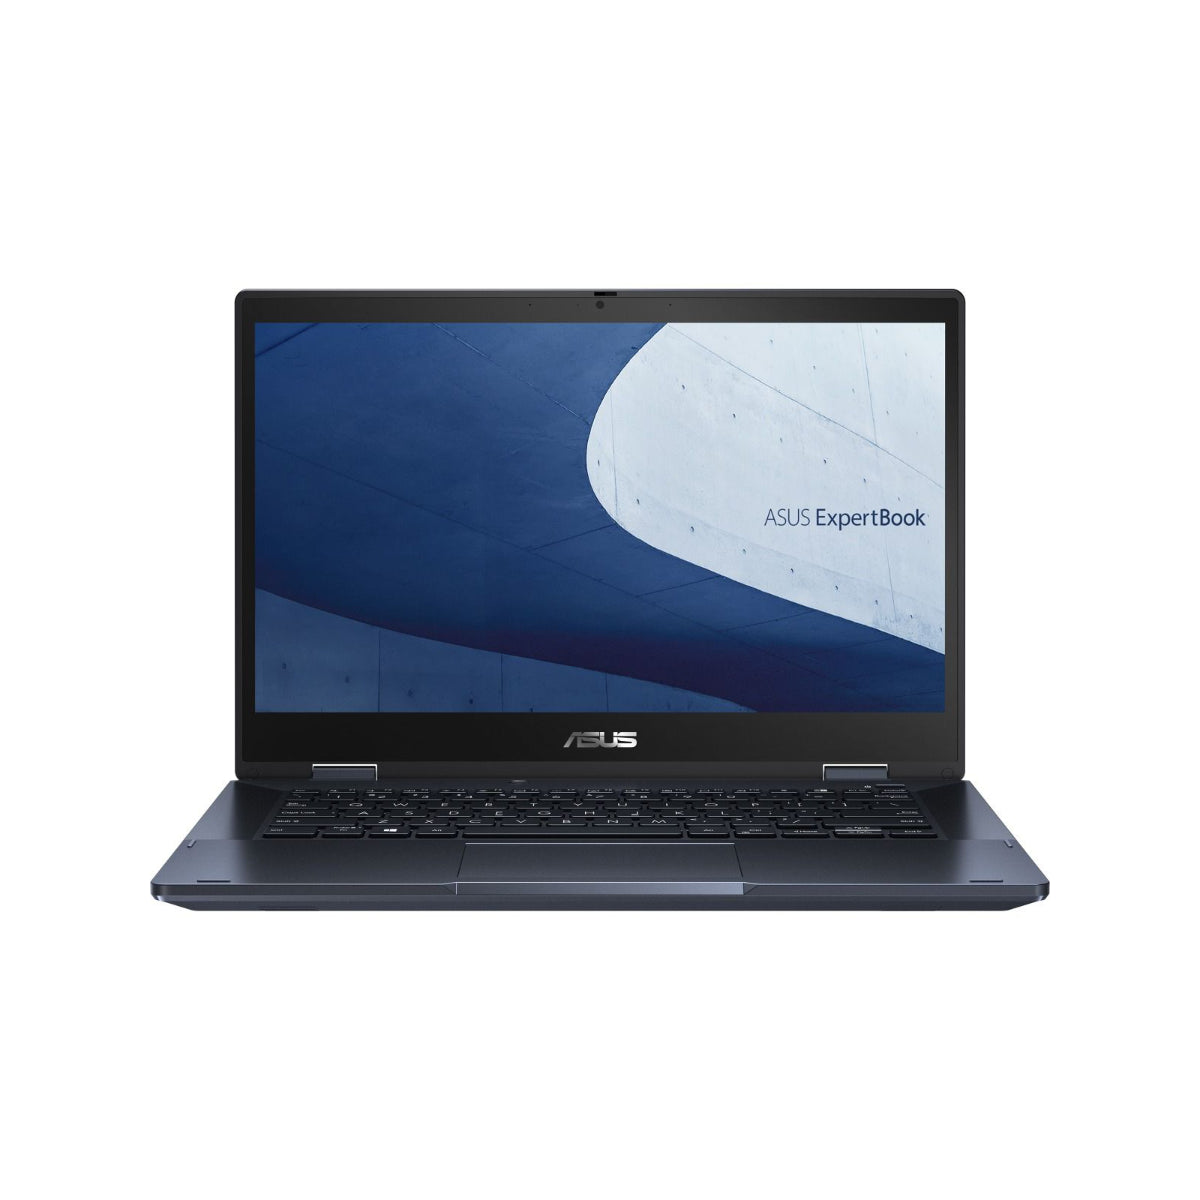 Asus Expertbook Advanced 14 - Core I5 Laptop